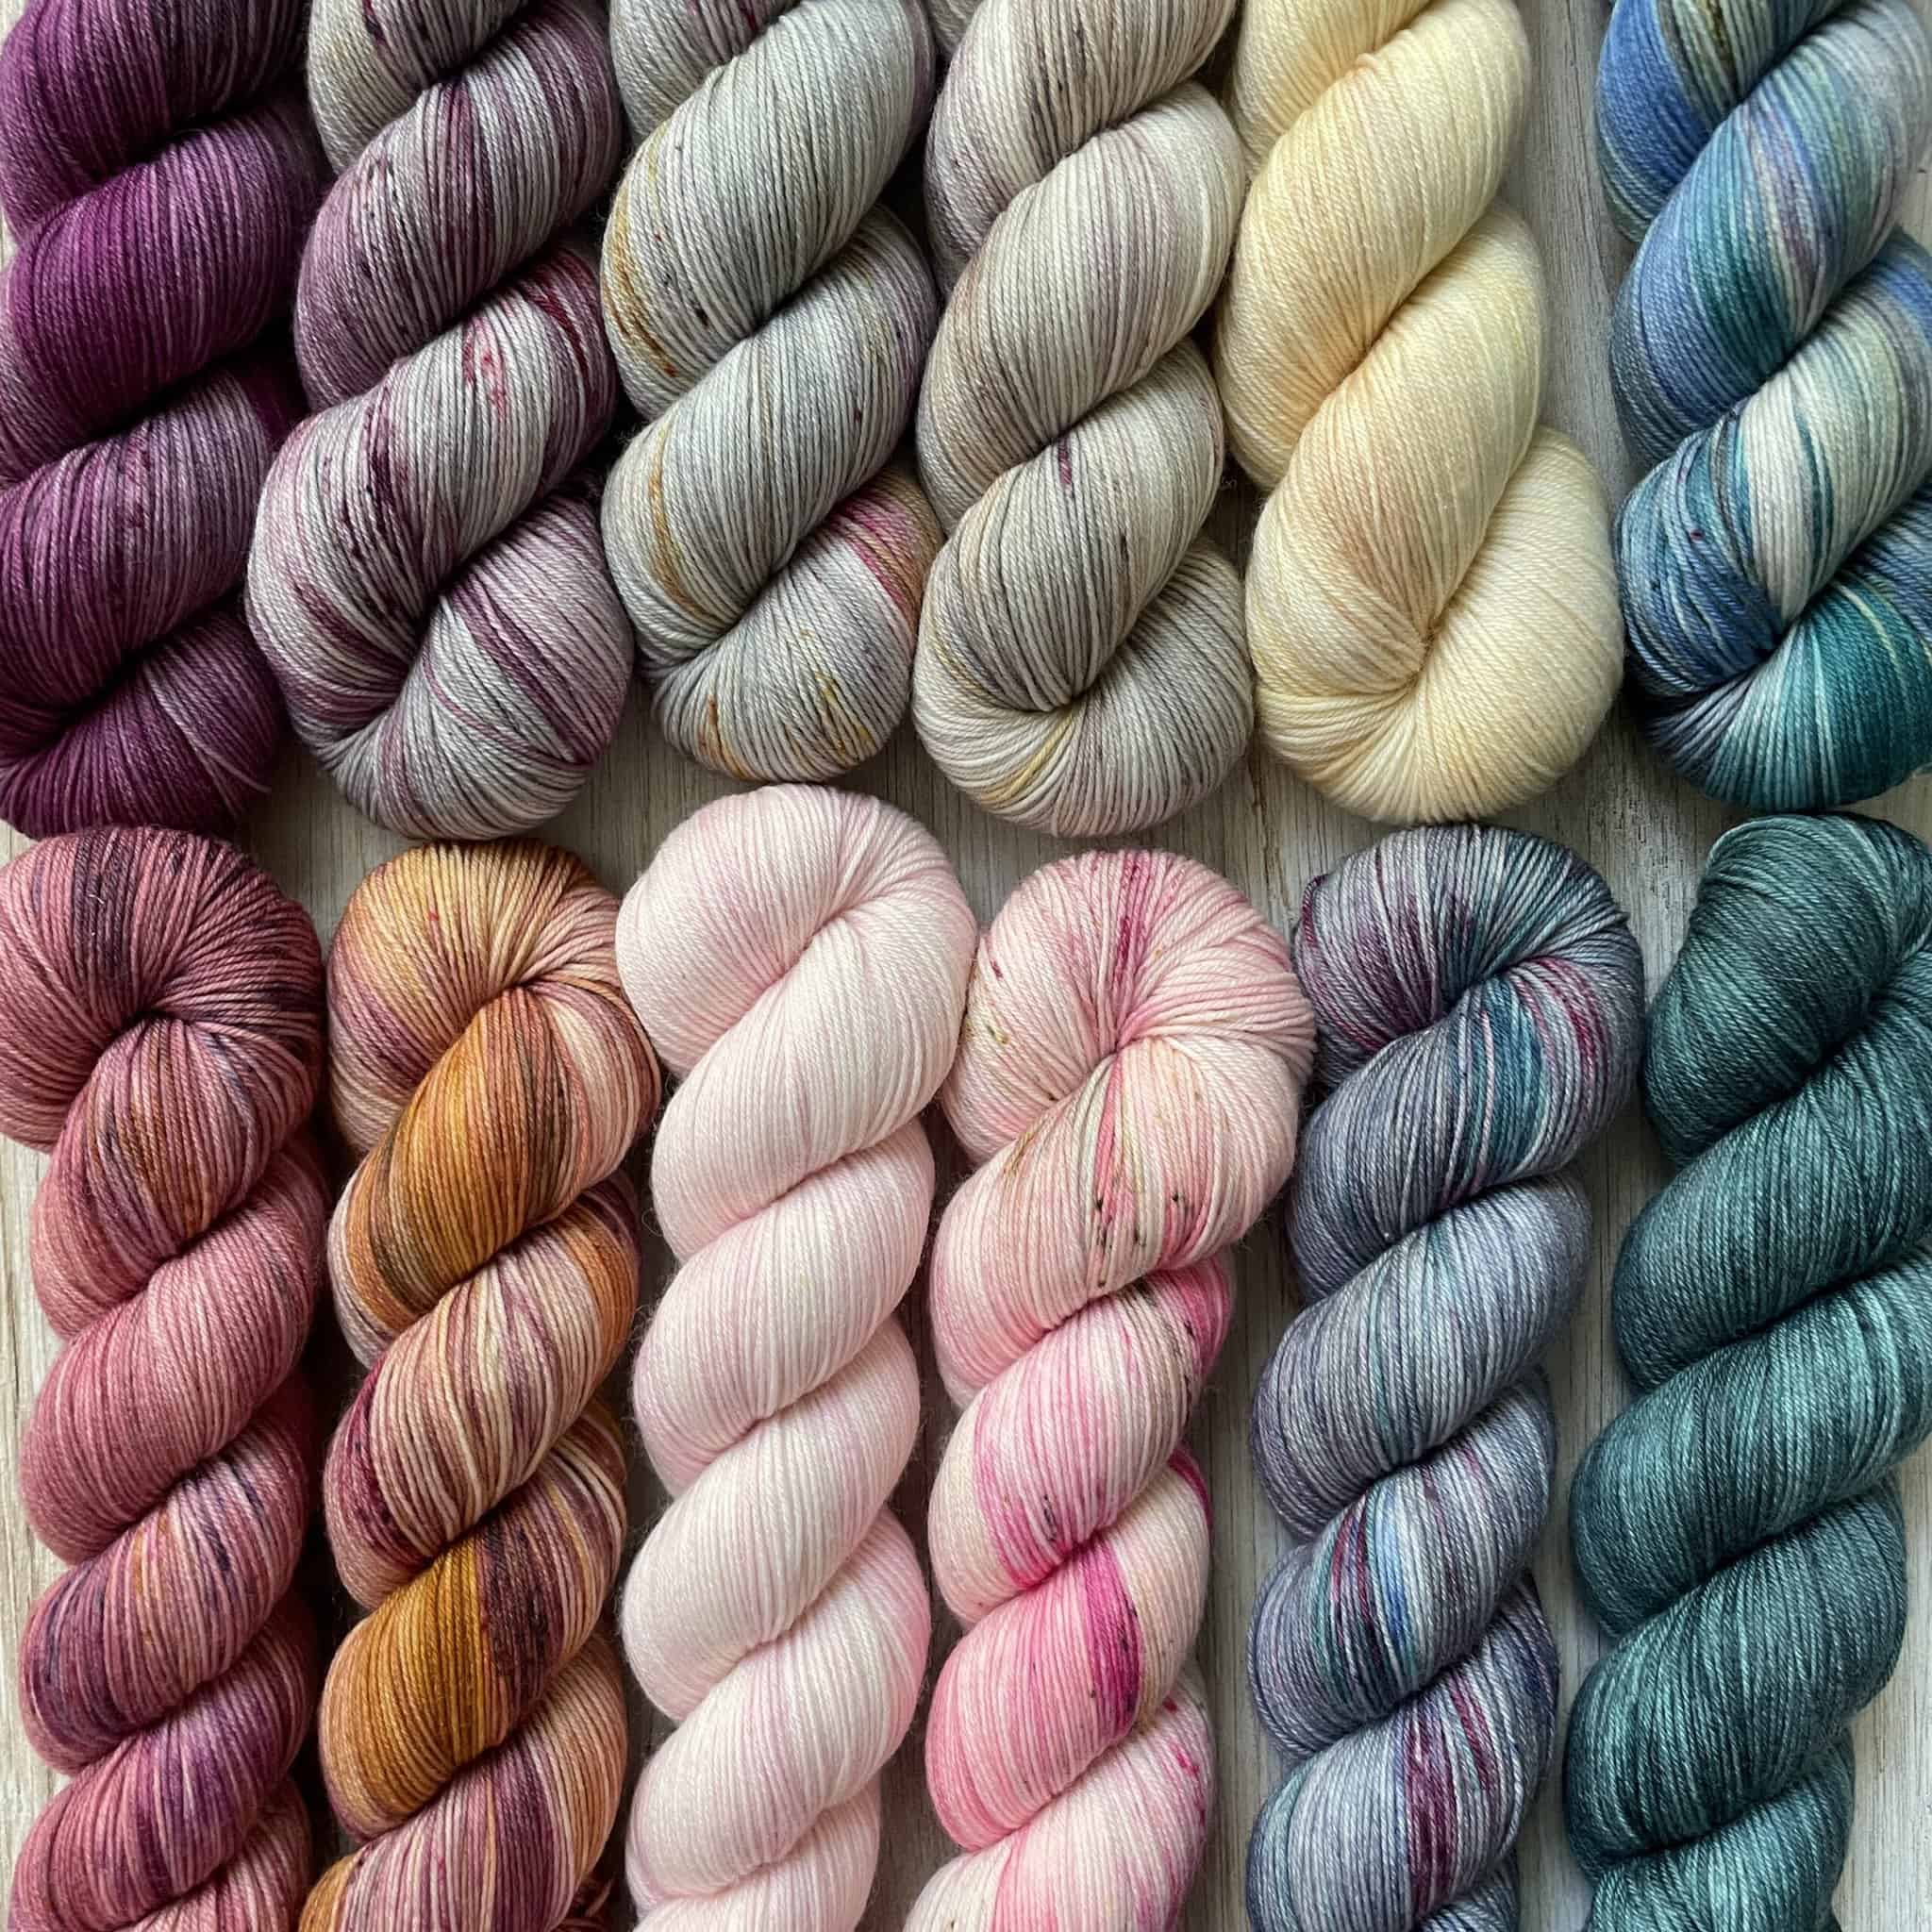 Skeins of purple, gray, yellow, blue, pink and orange yarn.